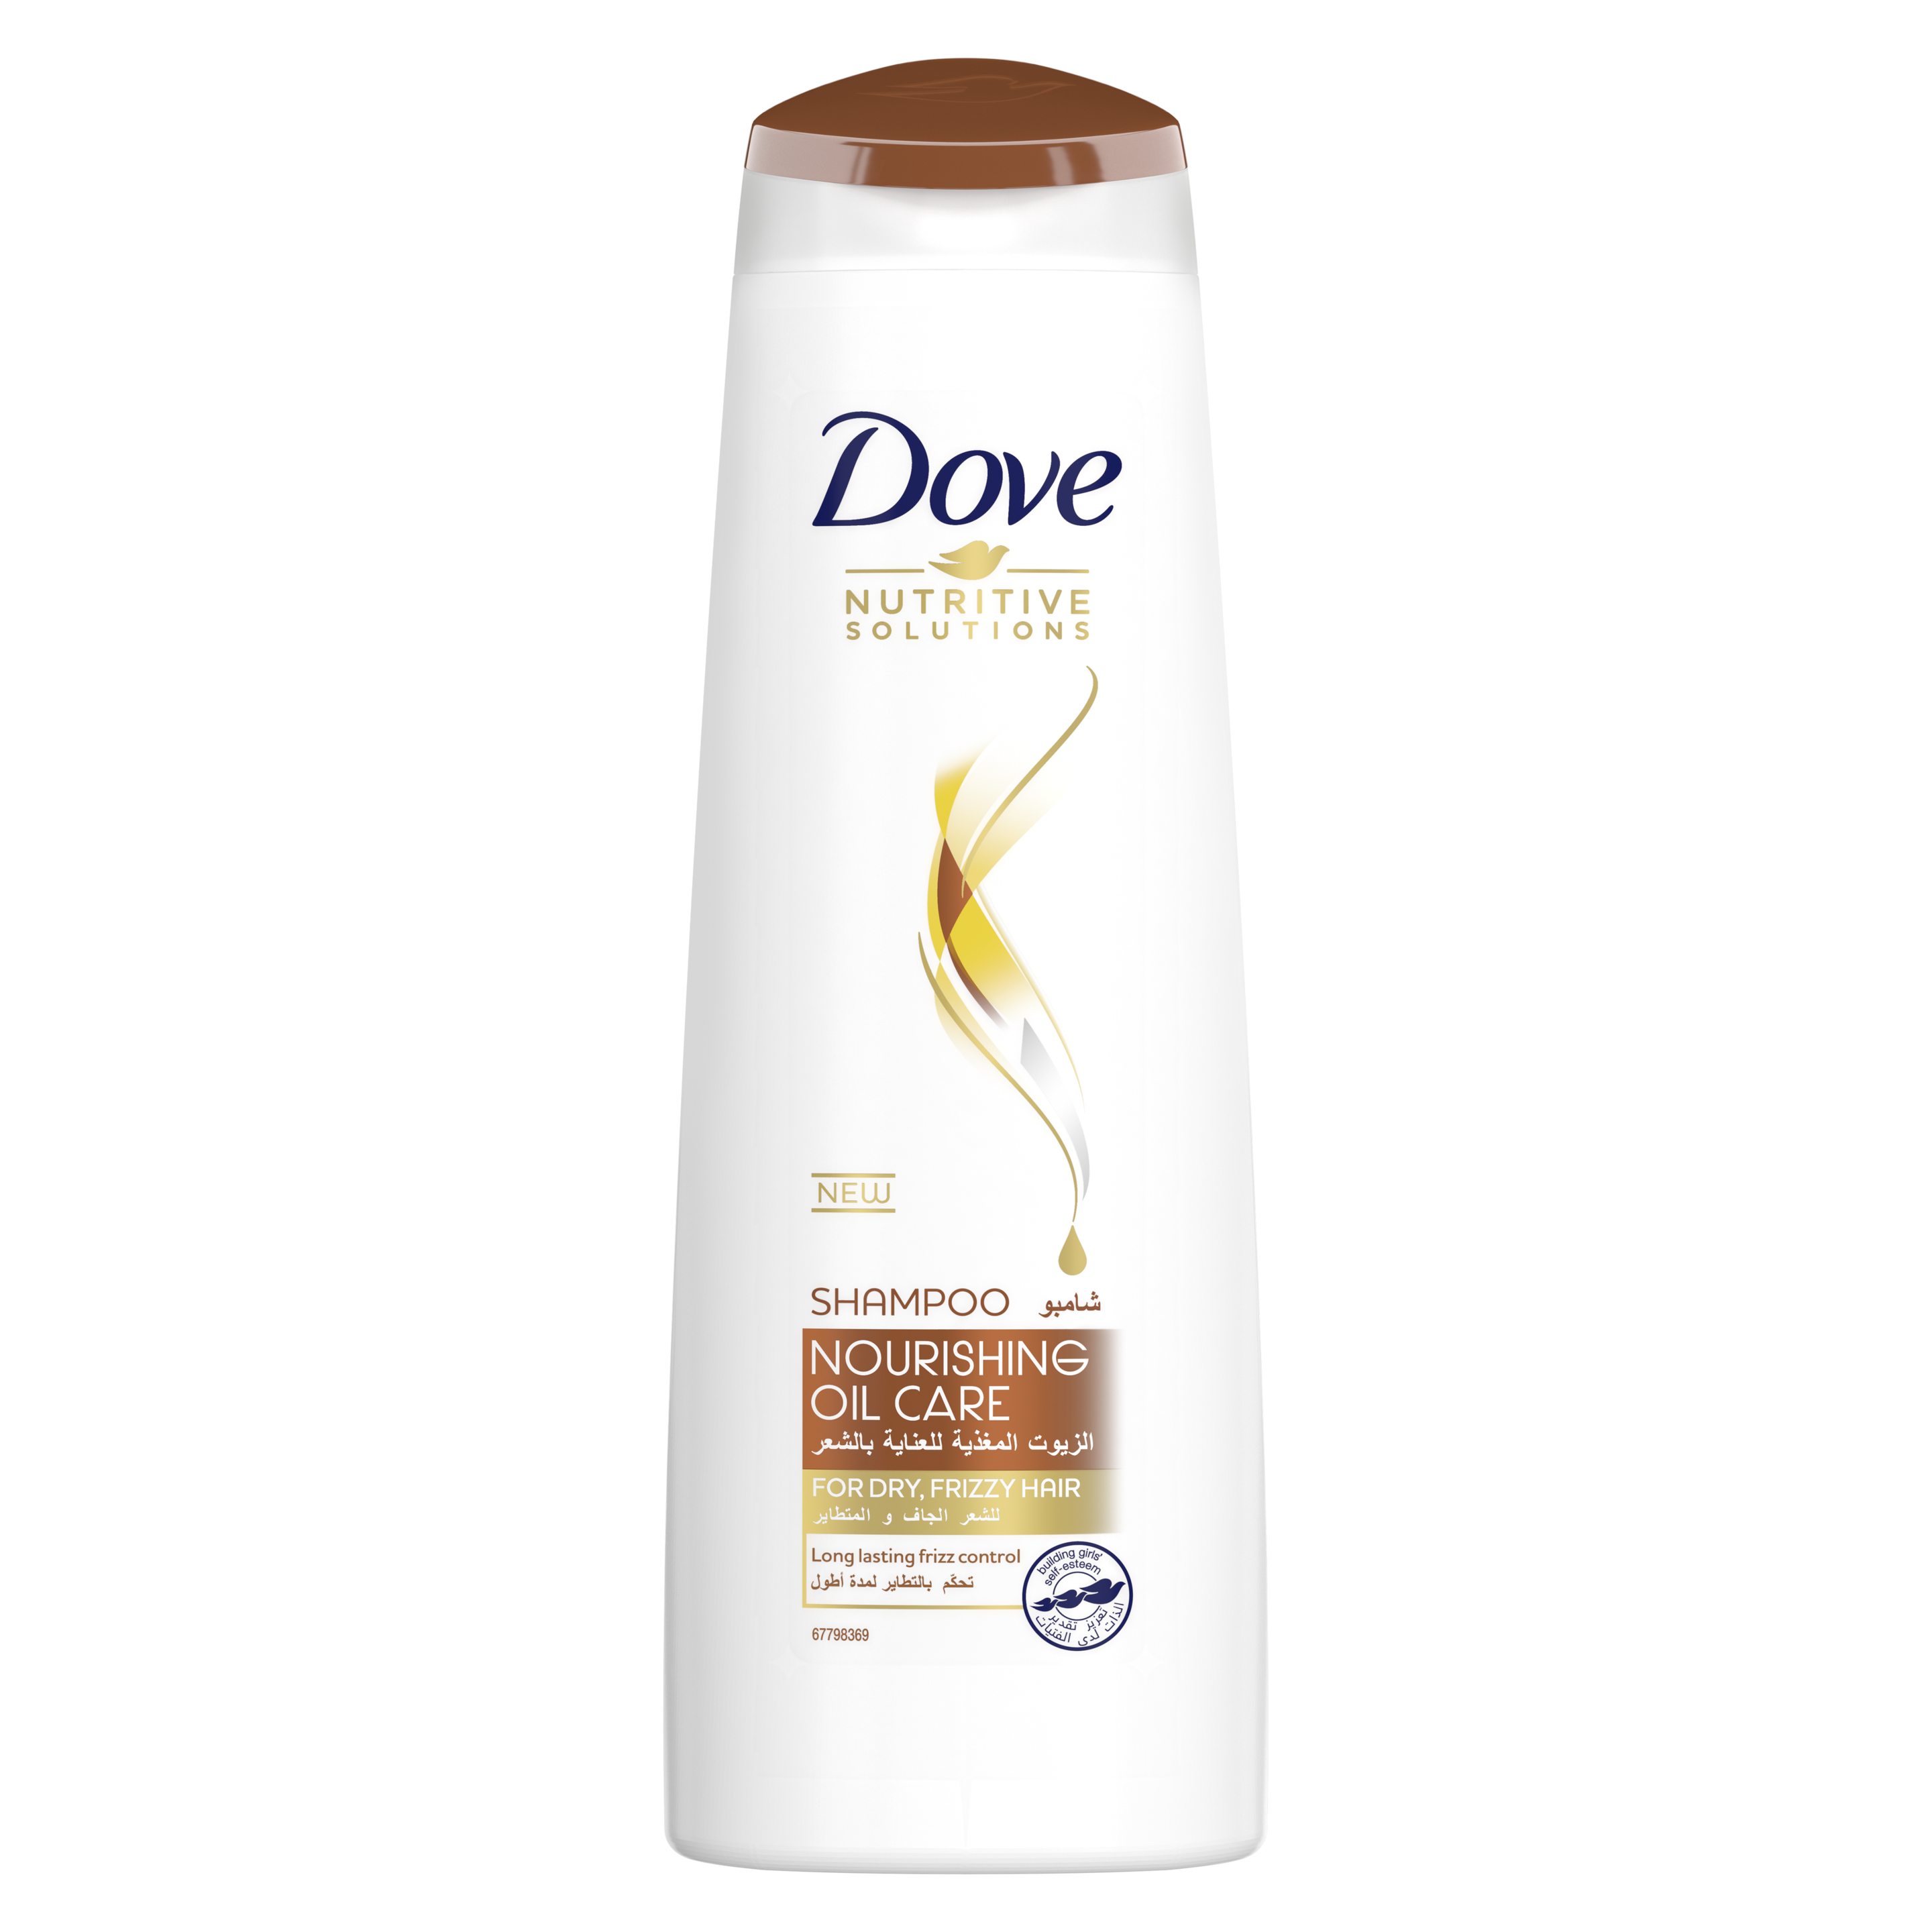 Dove Nutritive Solutions Nourishing Oil Care Shampoo 400ml